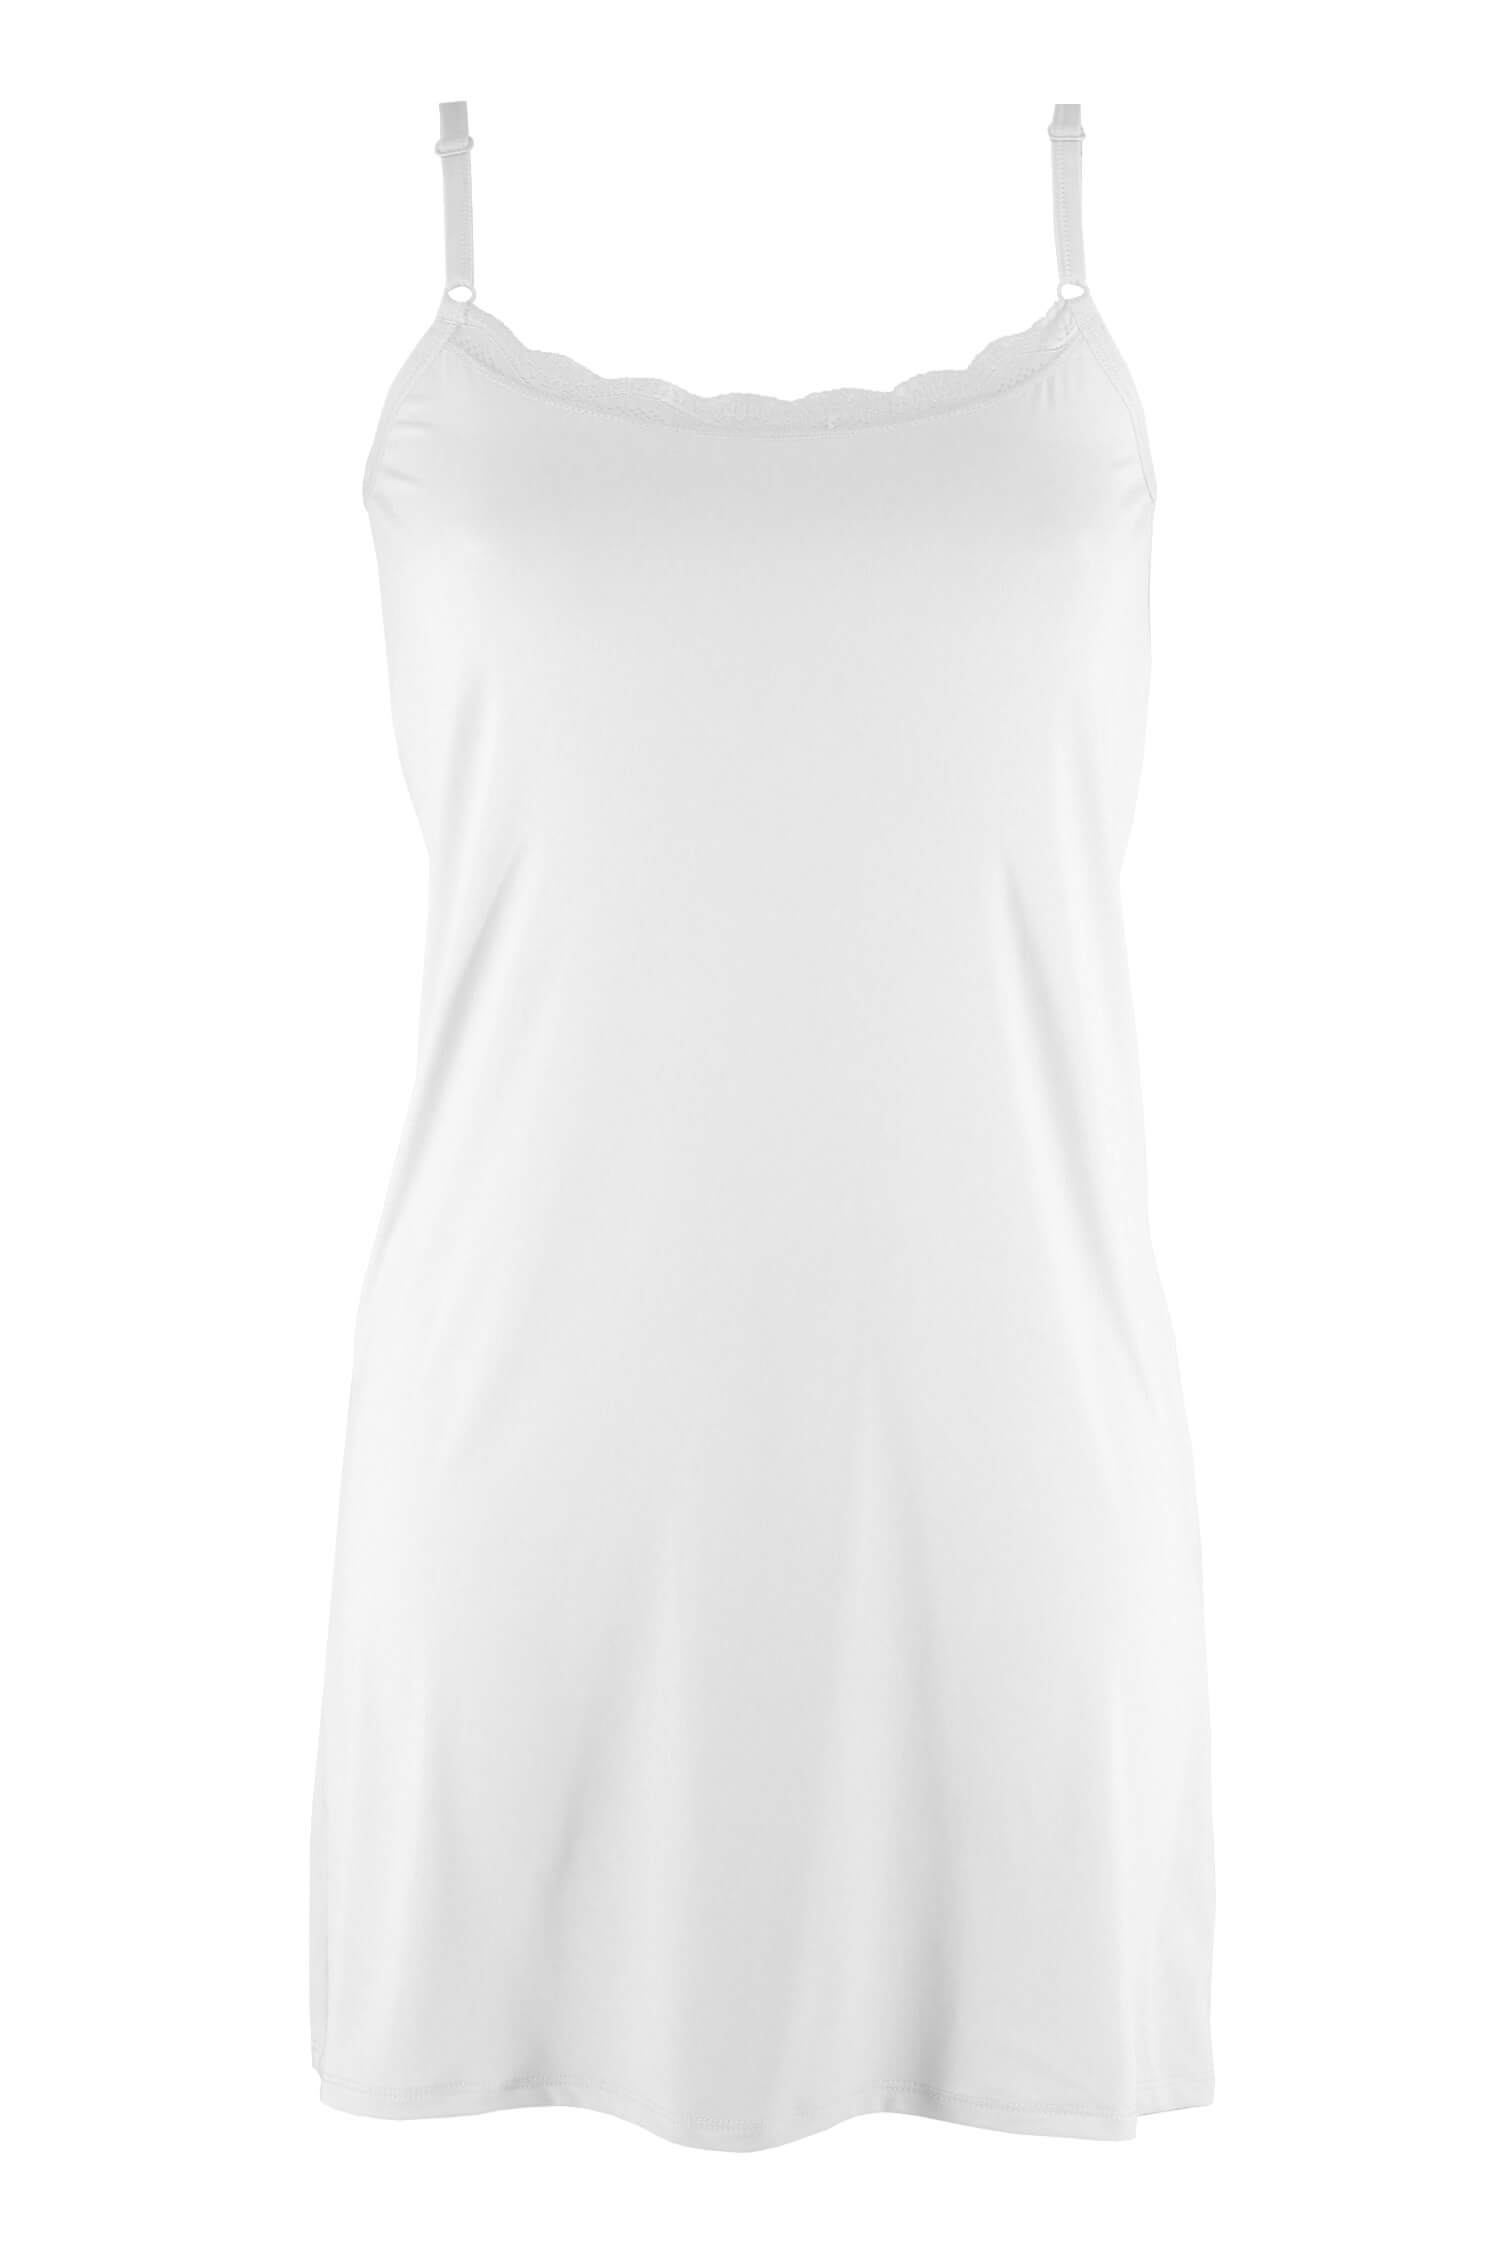 Tonička spodnička pod šaty s krajkou C5632 M bílá